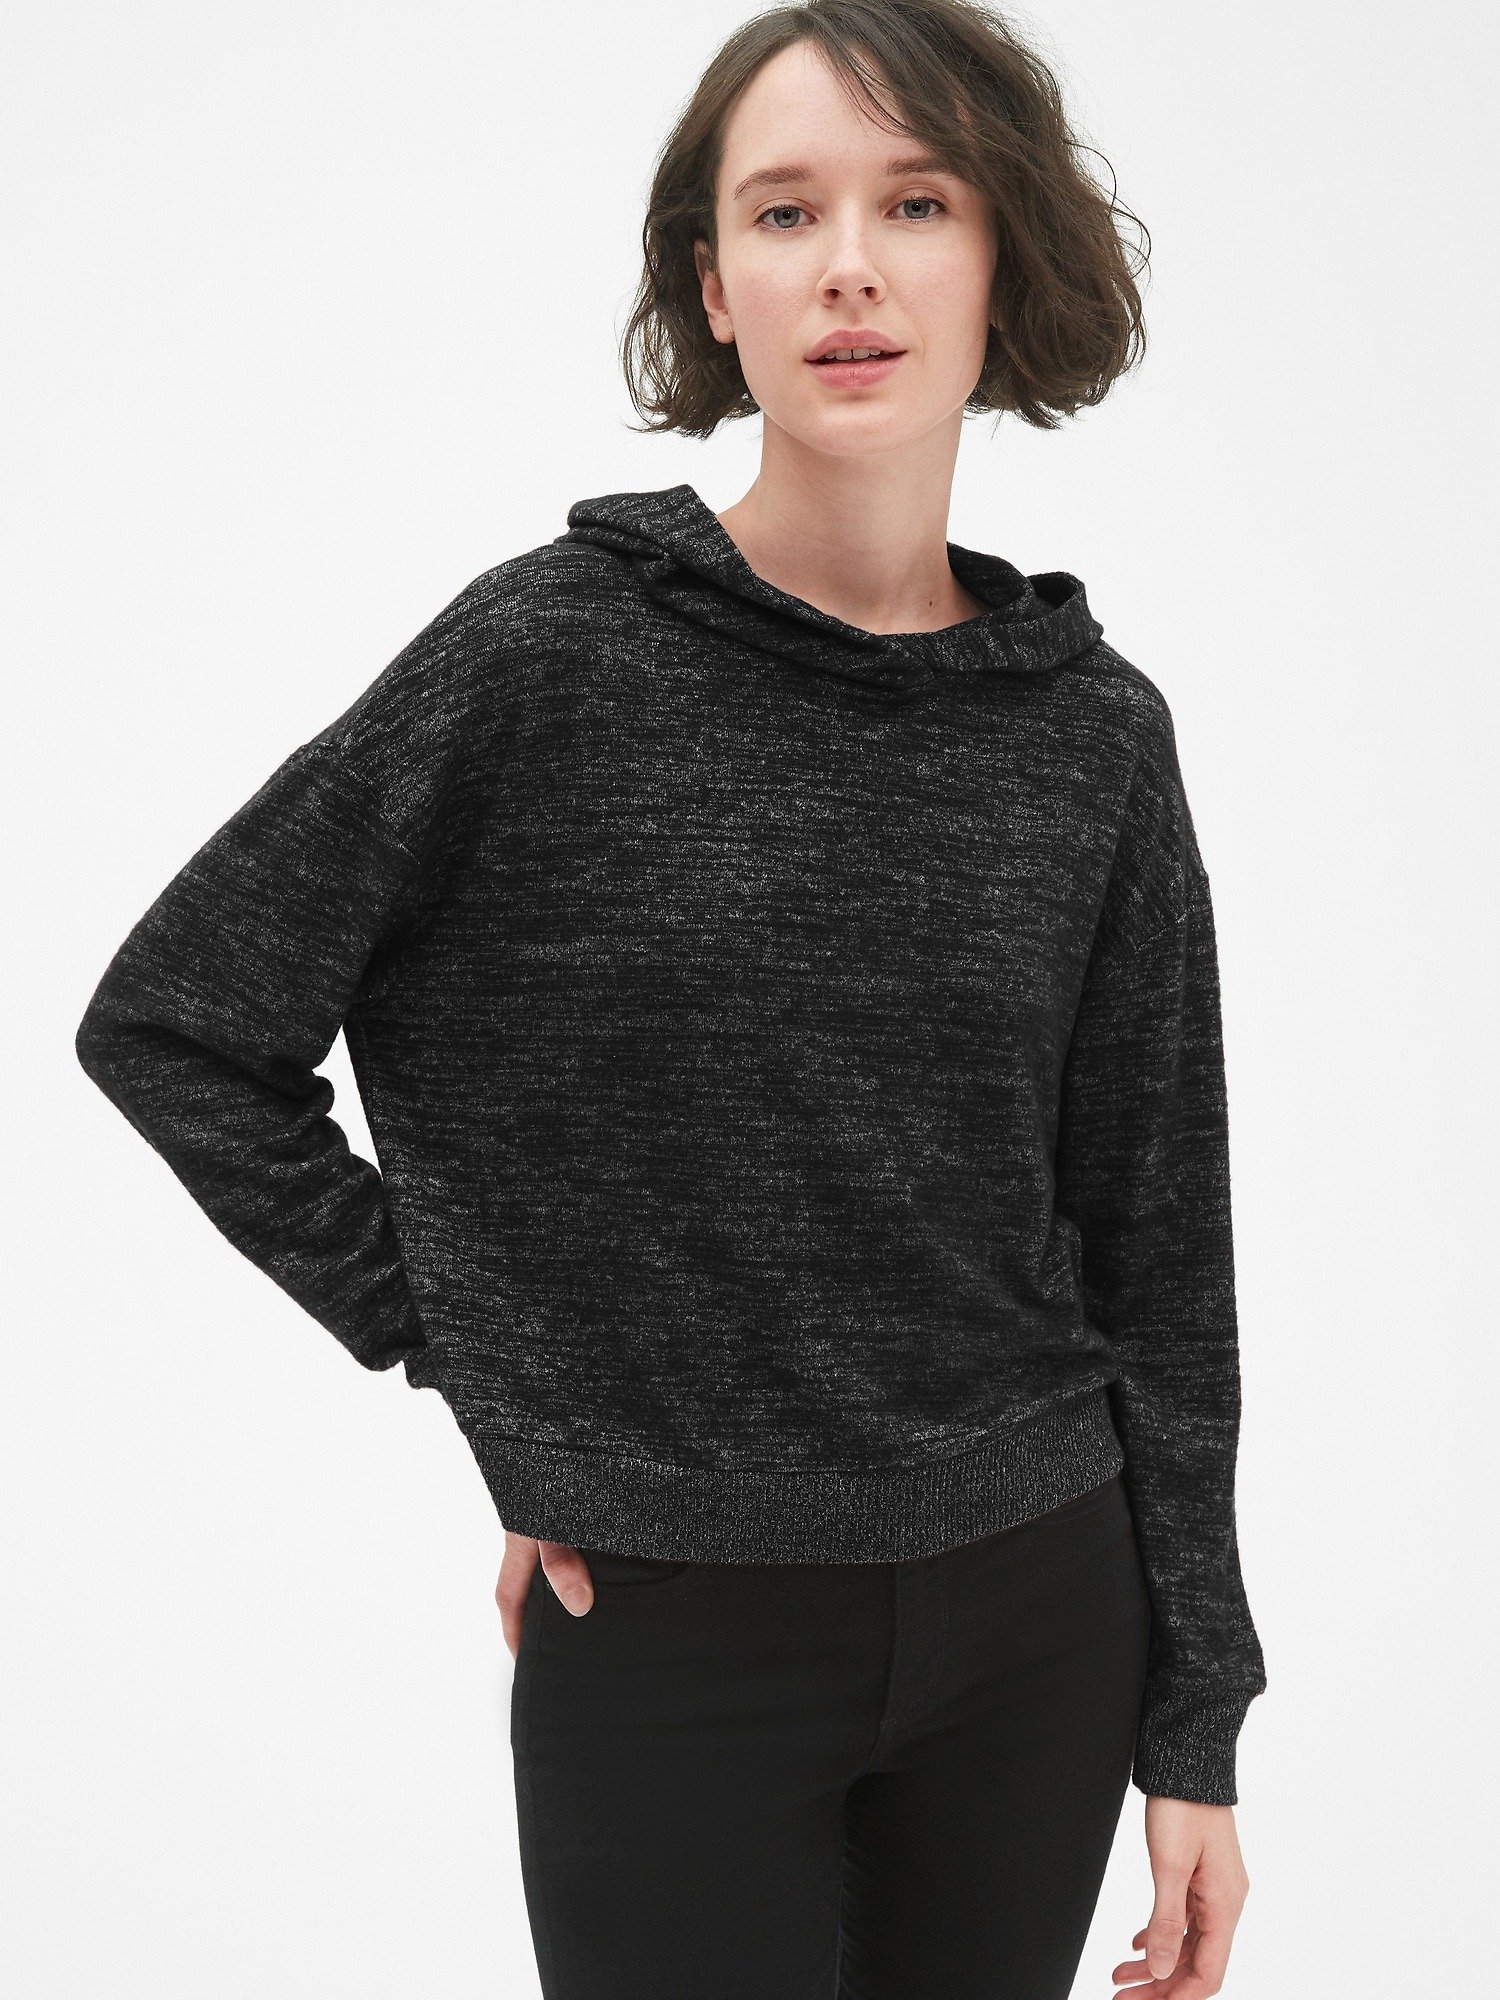 Softspun Kapüşonlu Kısa Sweatshirt product image